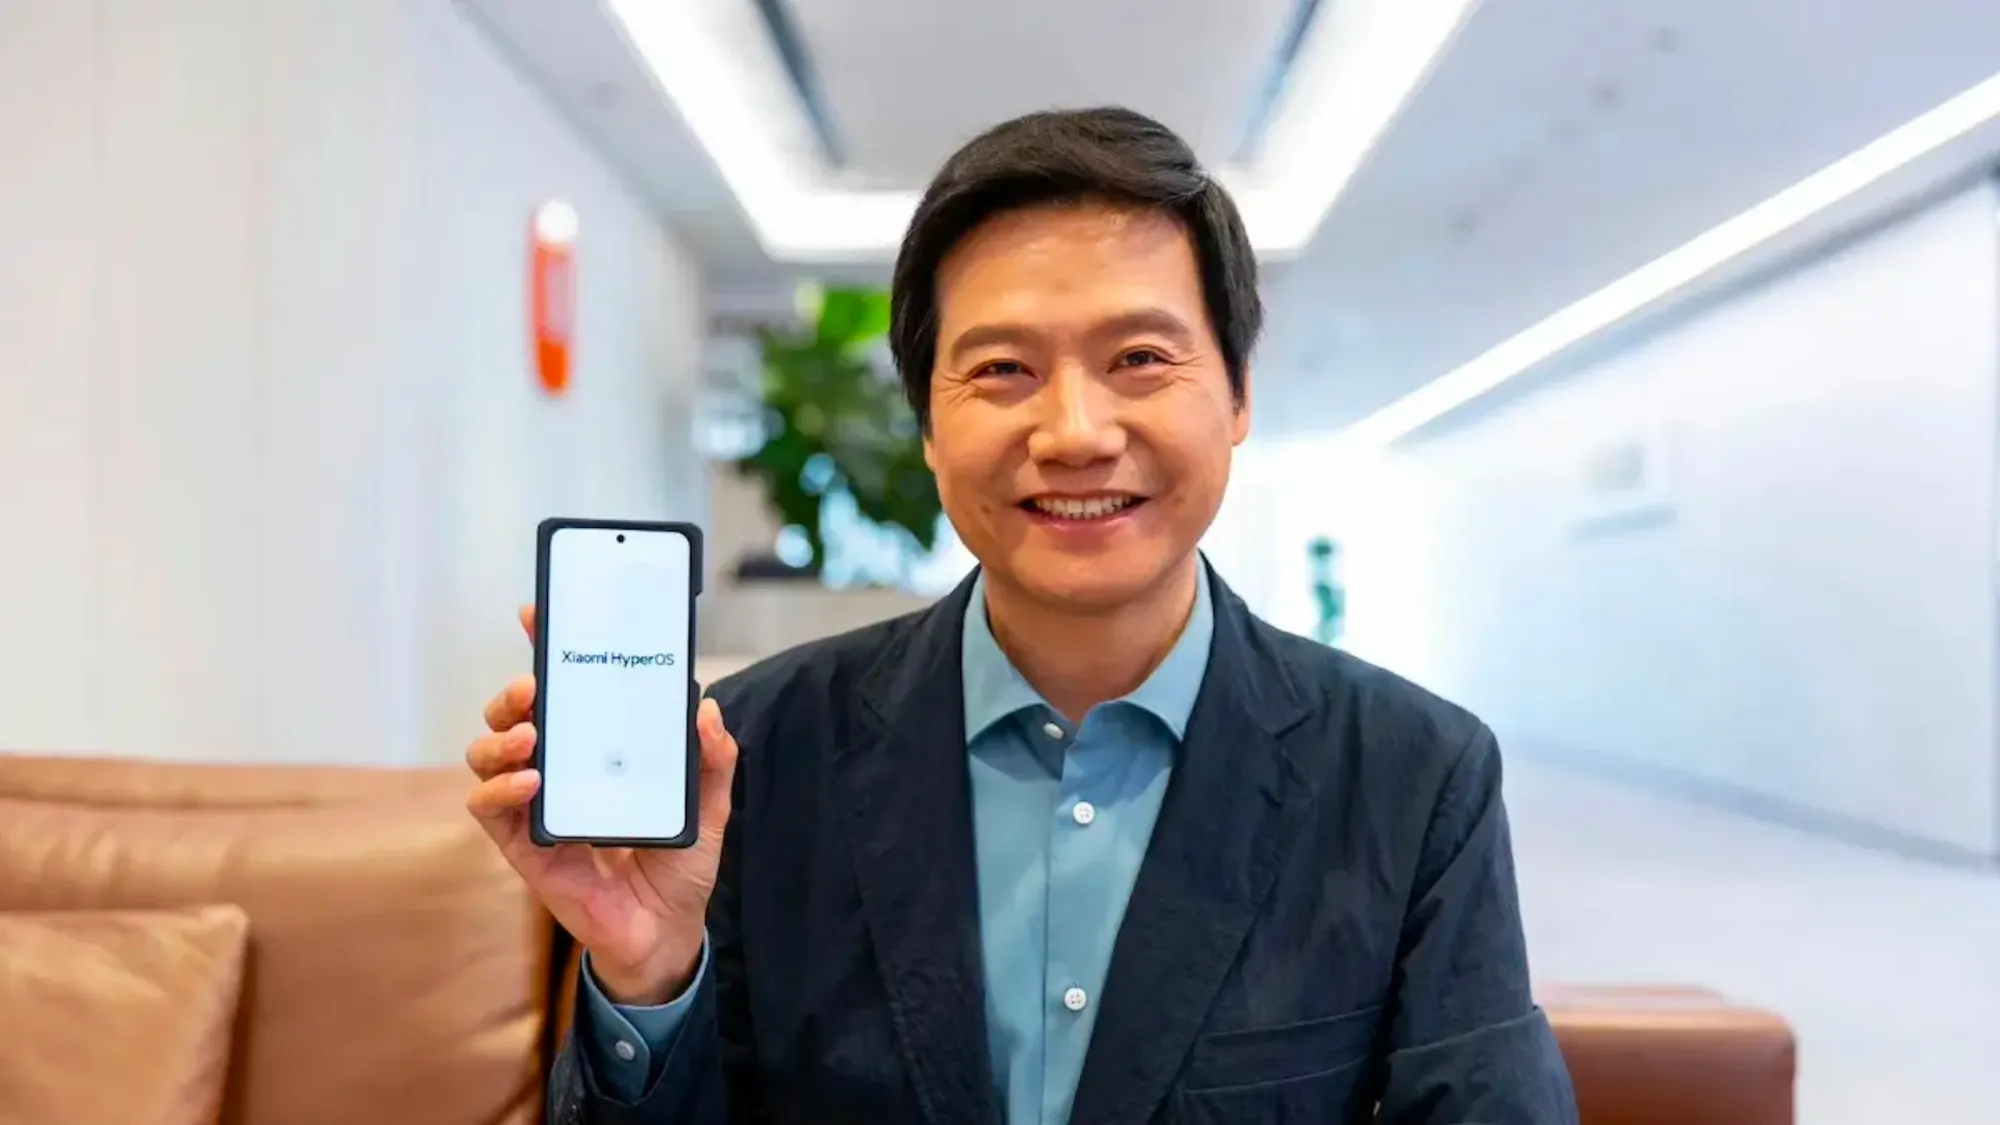 Lei Jun, CEO of Xiaomi, showcasing a Xiaomi smartphone equipped with HyperOS